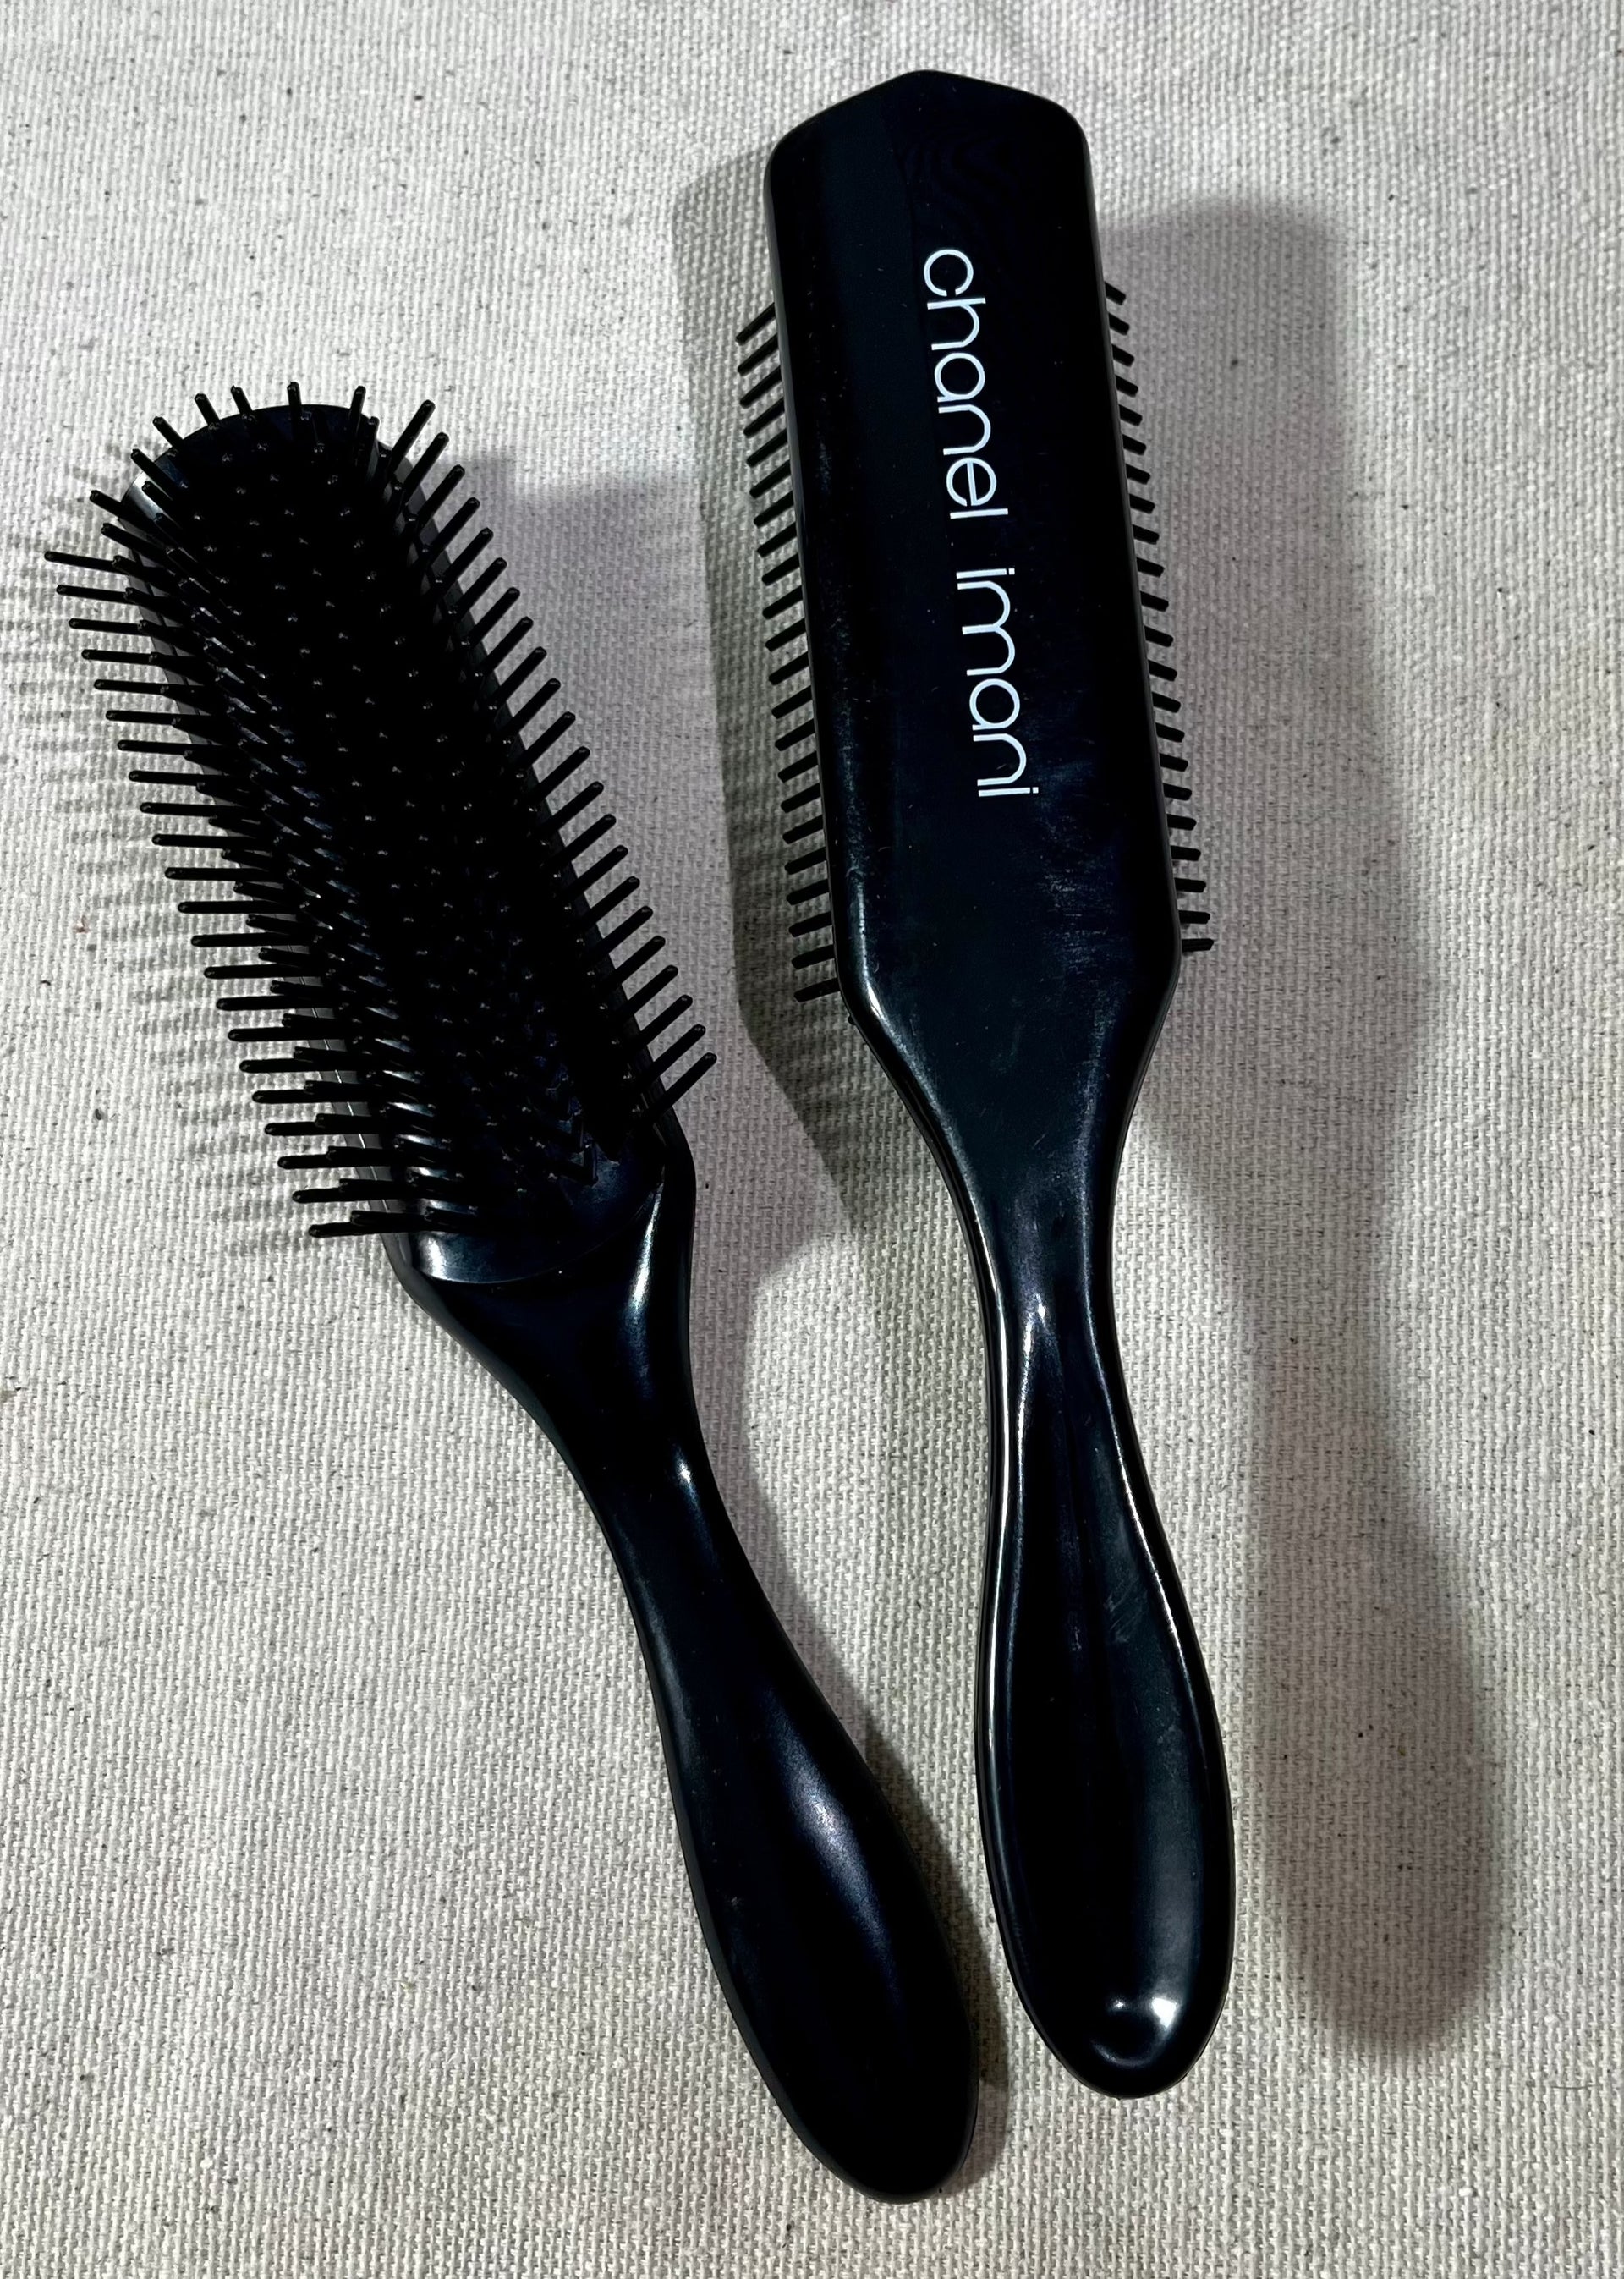 Hair Brush Chanel 